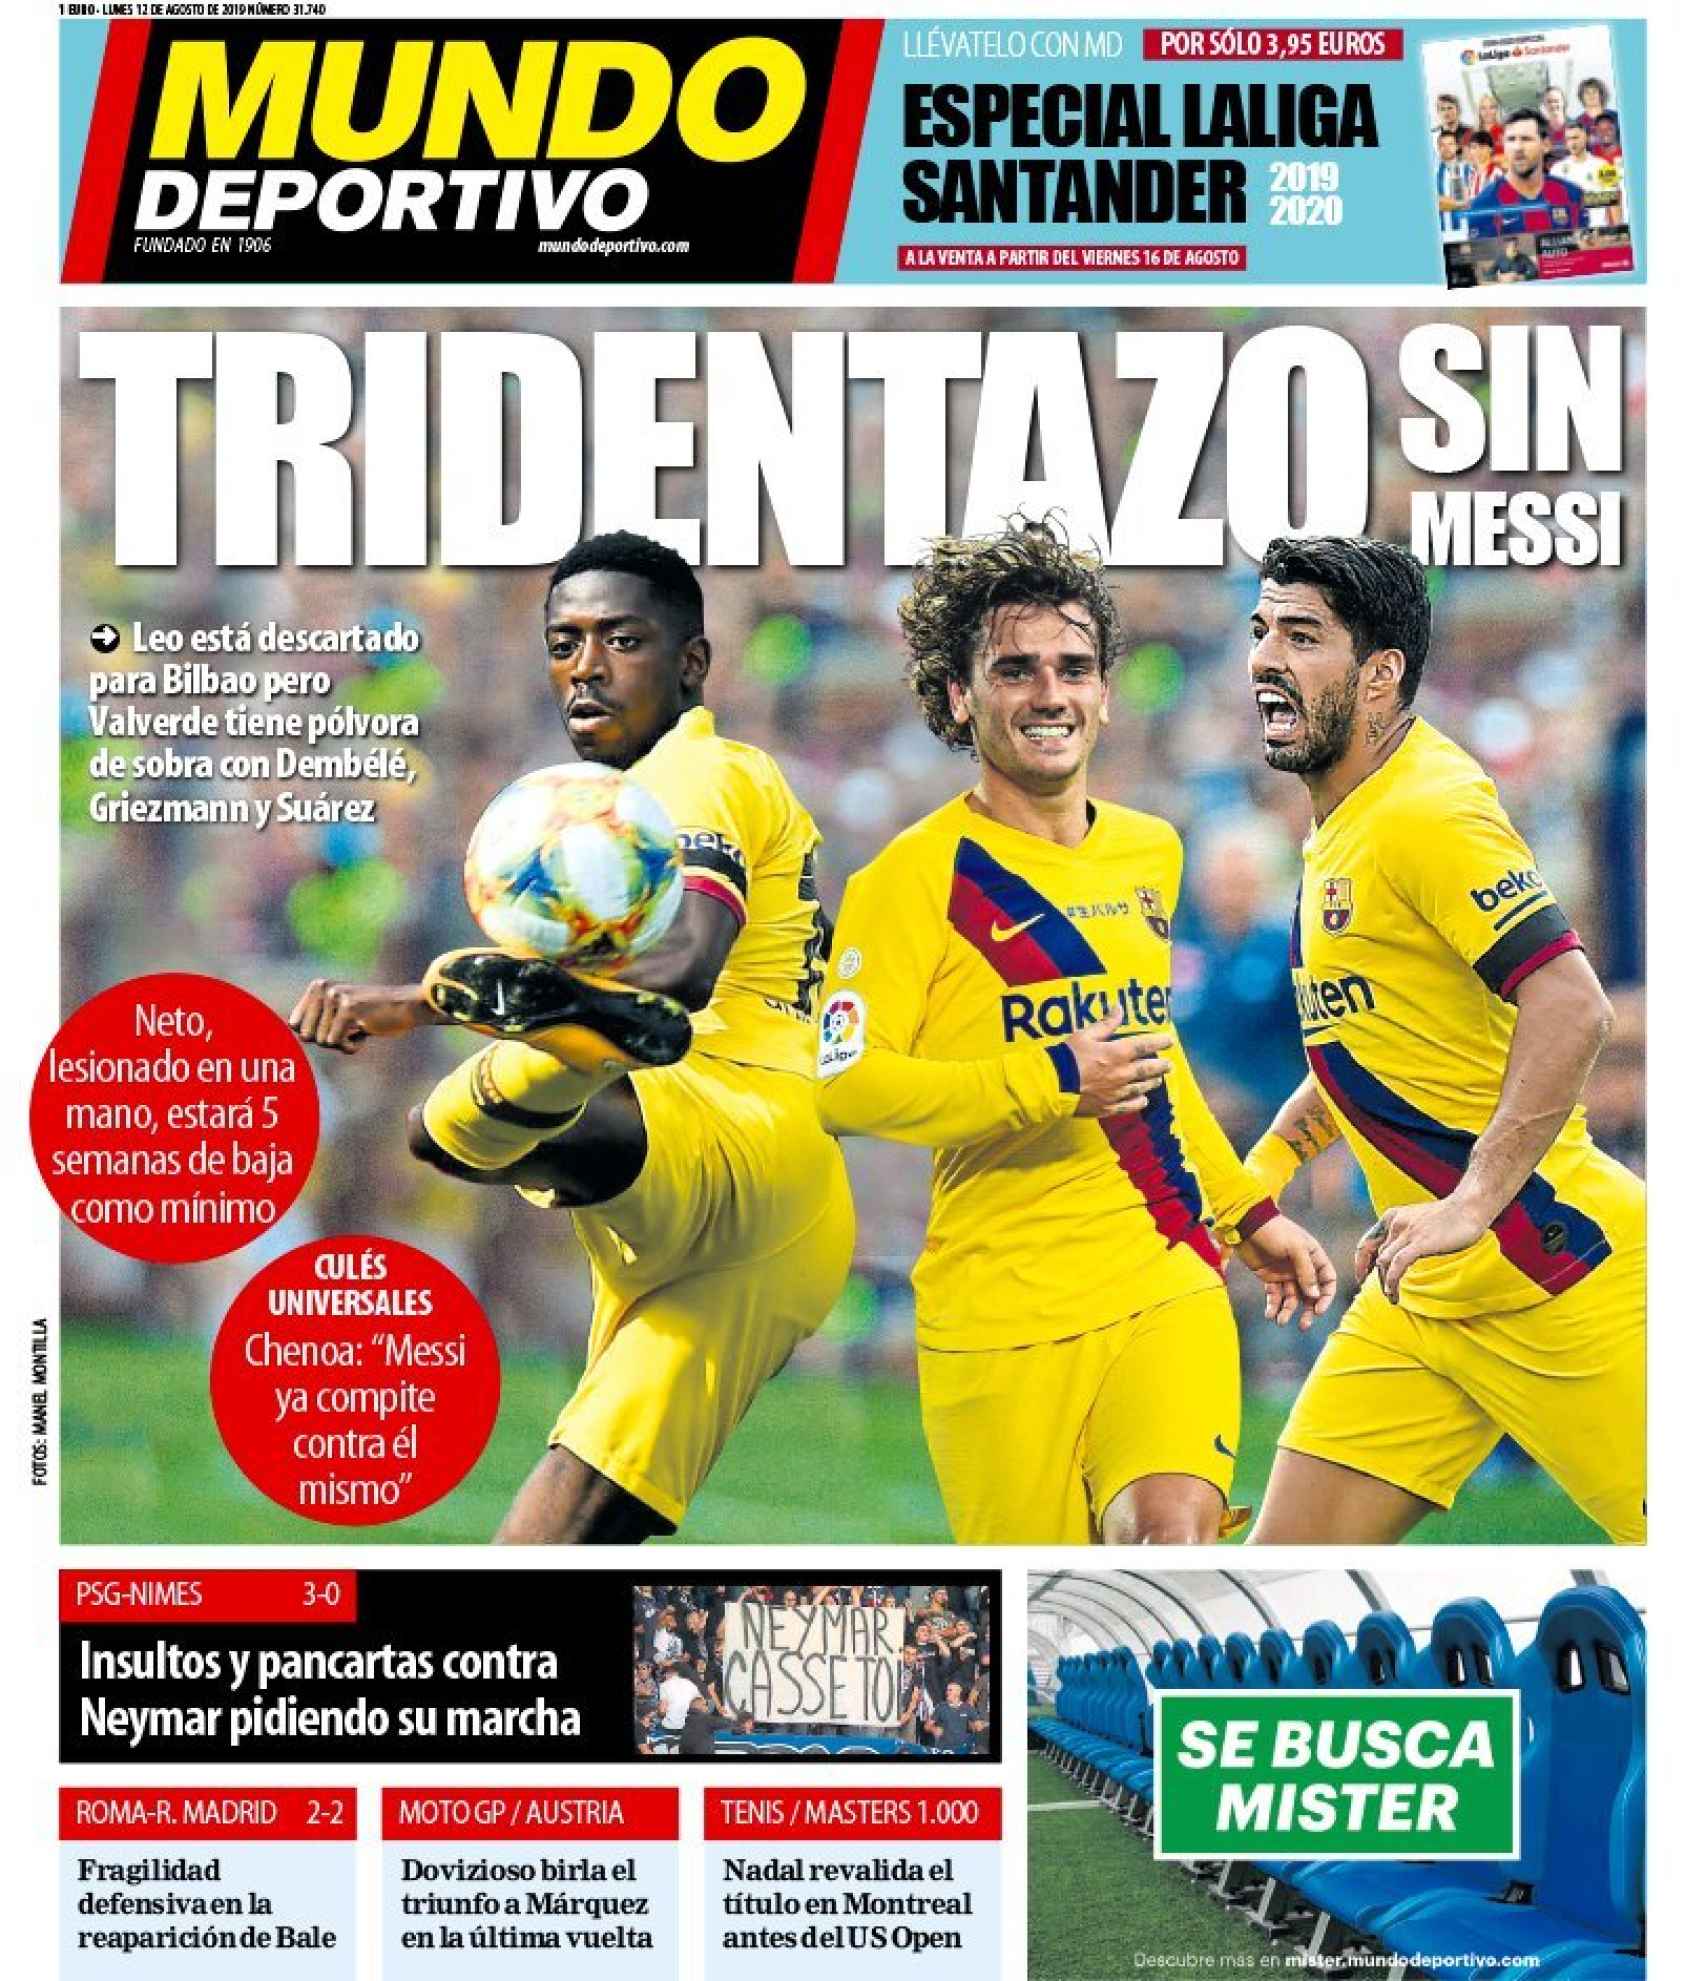 La portada del diario Mundo Deportivo (12/08/2019)1706 x 1981